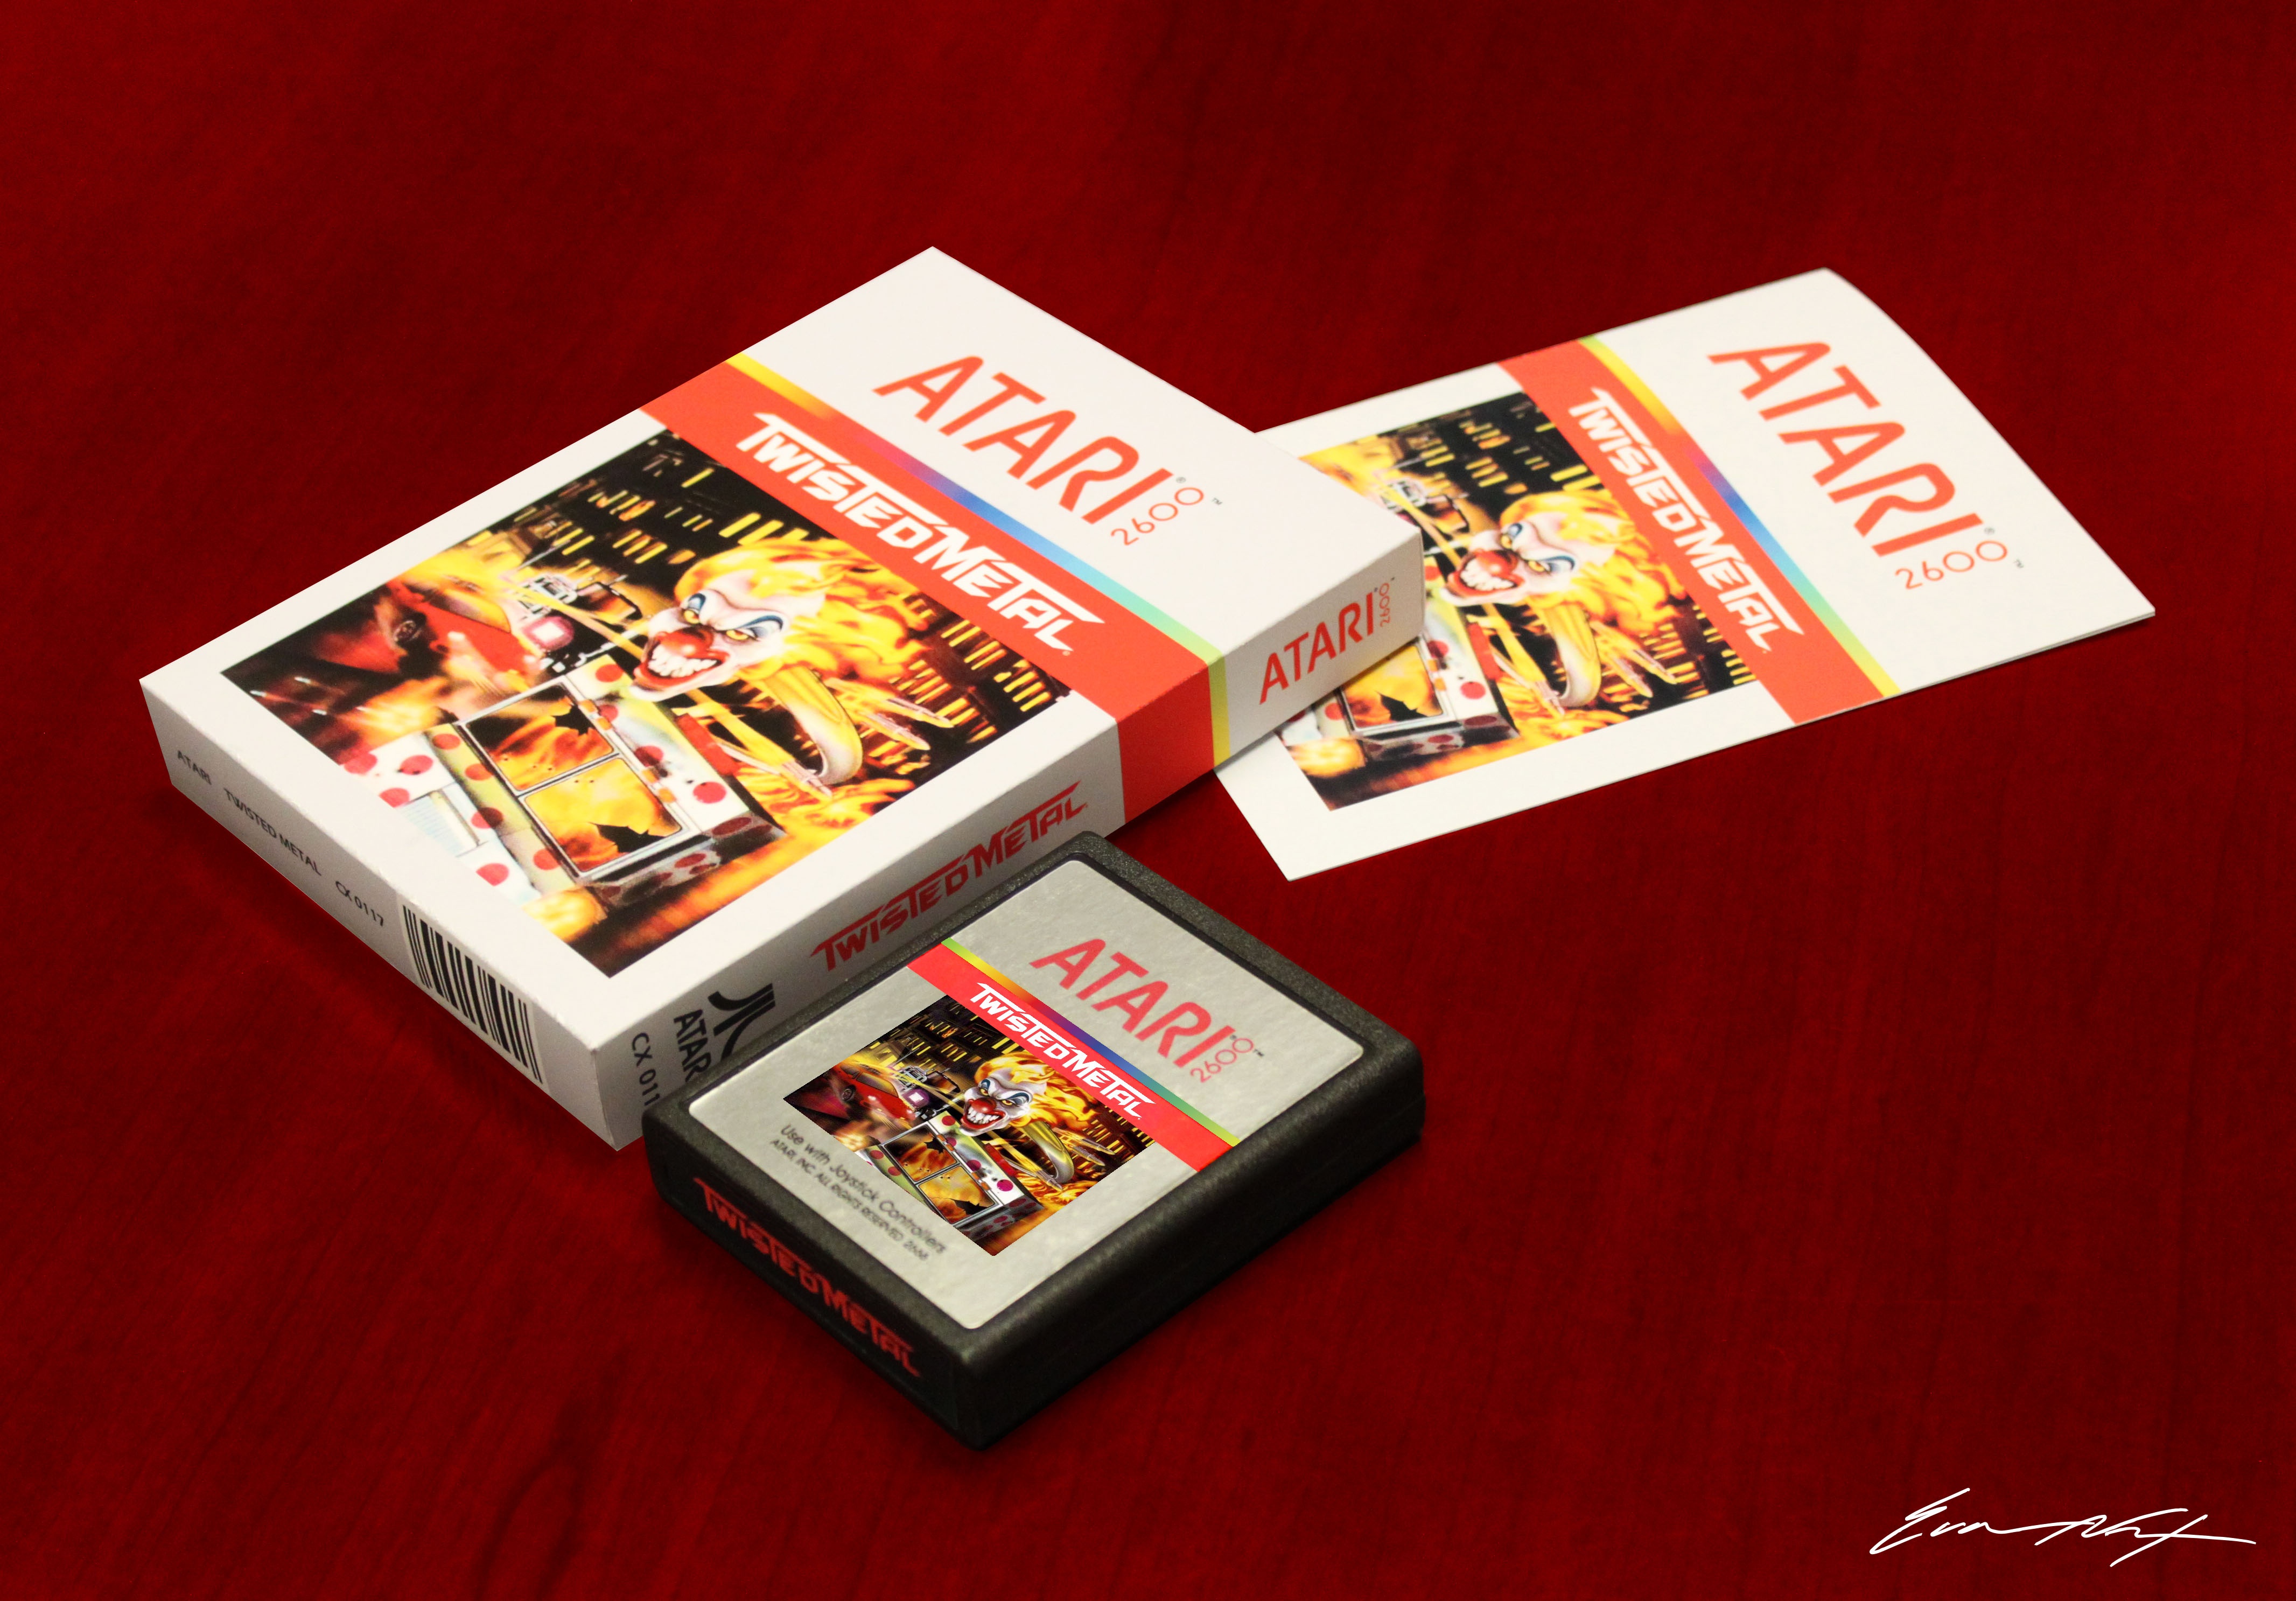 Twisted Metal | Atari 2600 box cover